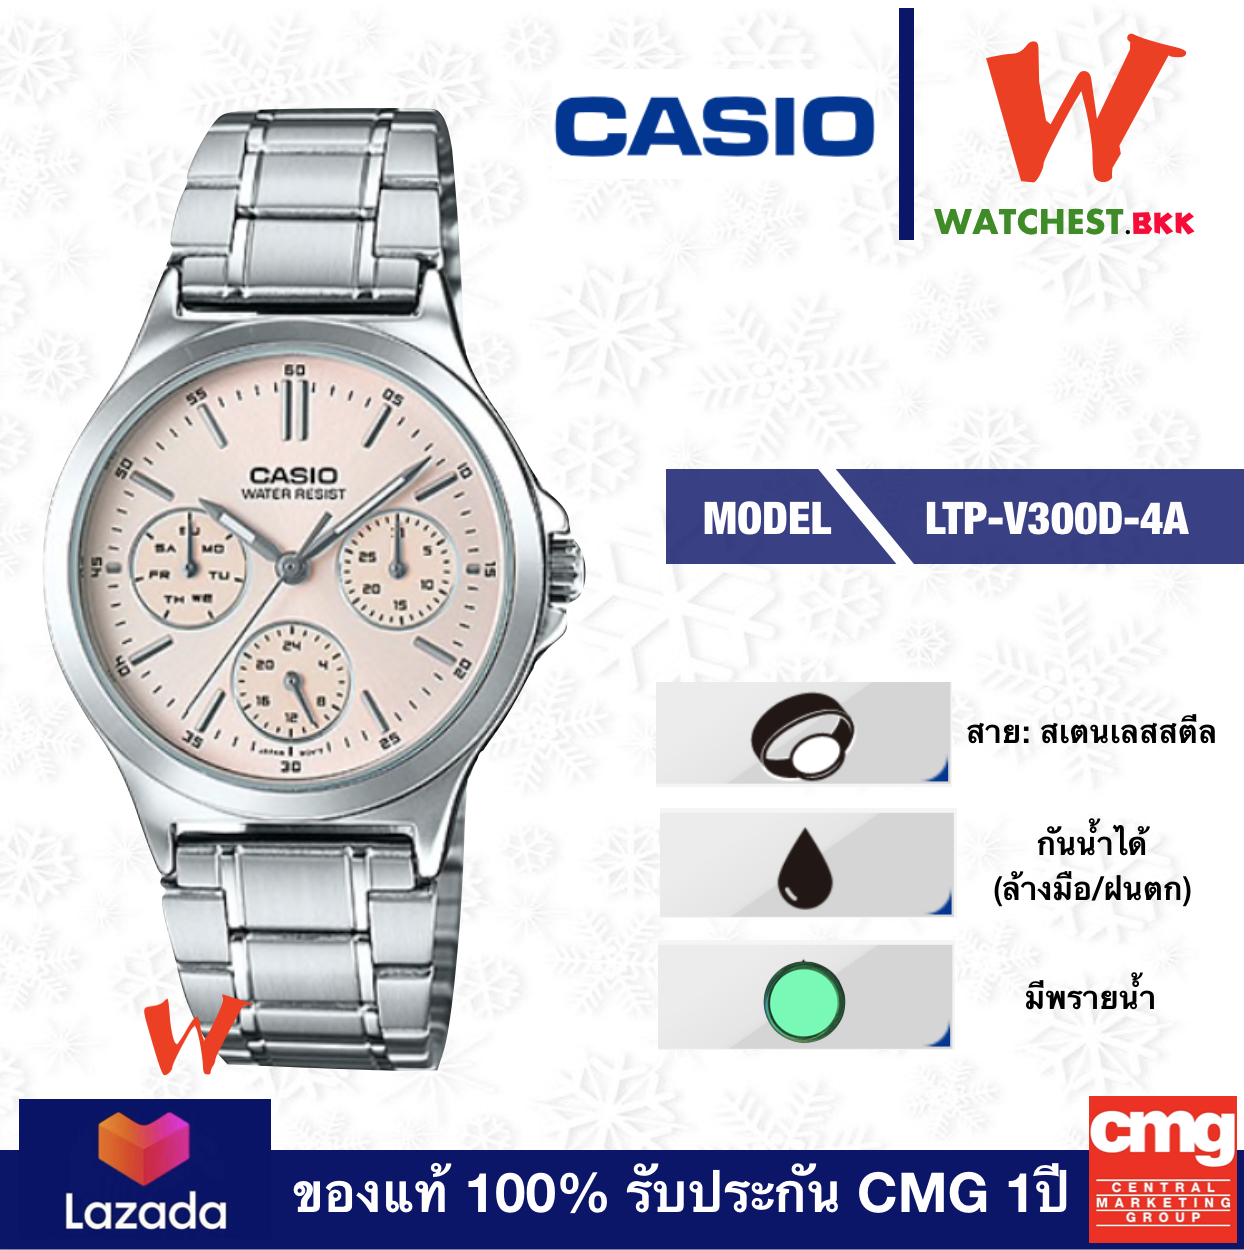 casio นาฬิกาข้อมือผู้หญิง สายสเตนเลส รุ่น LTP-V300D-4A คาสิโอ้ สายเหล็ก ตัวล็อกบานพับ (watchestbkk คาสิโอ แท้ ของแท้100% ประกัน CMG)